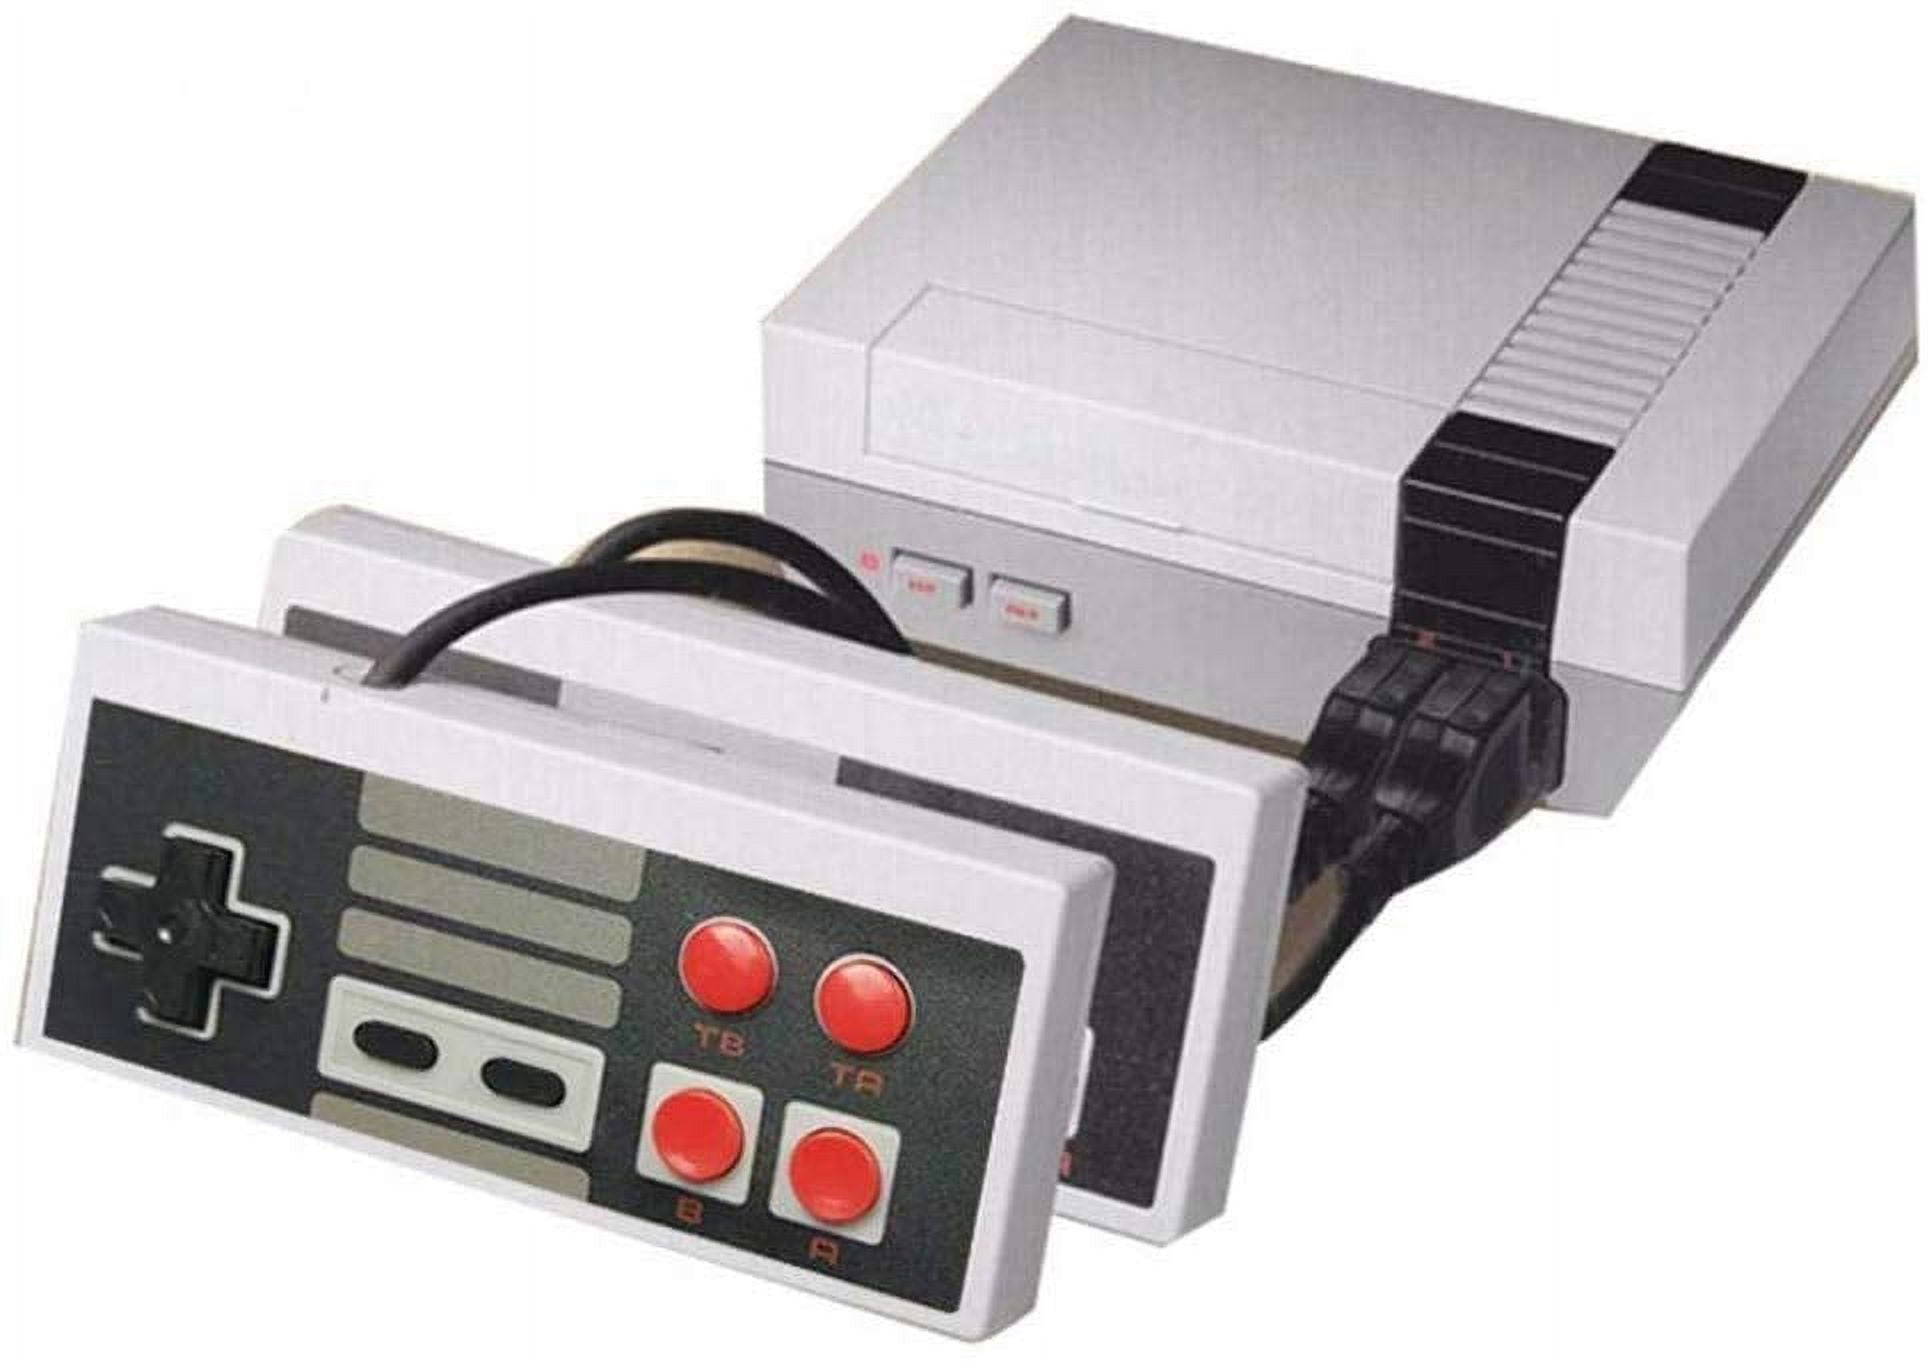 Vídeo Game Retrôbox 8 Bits - Nintendo Nes Classic Edition 620